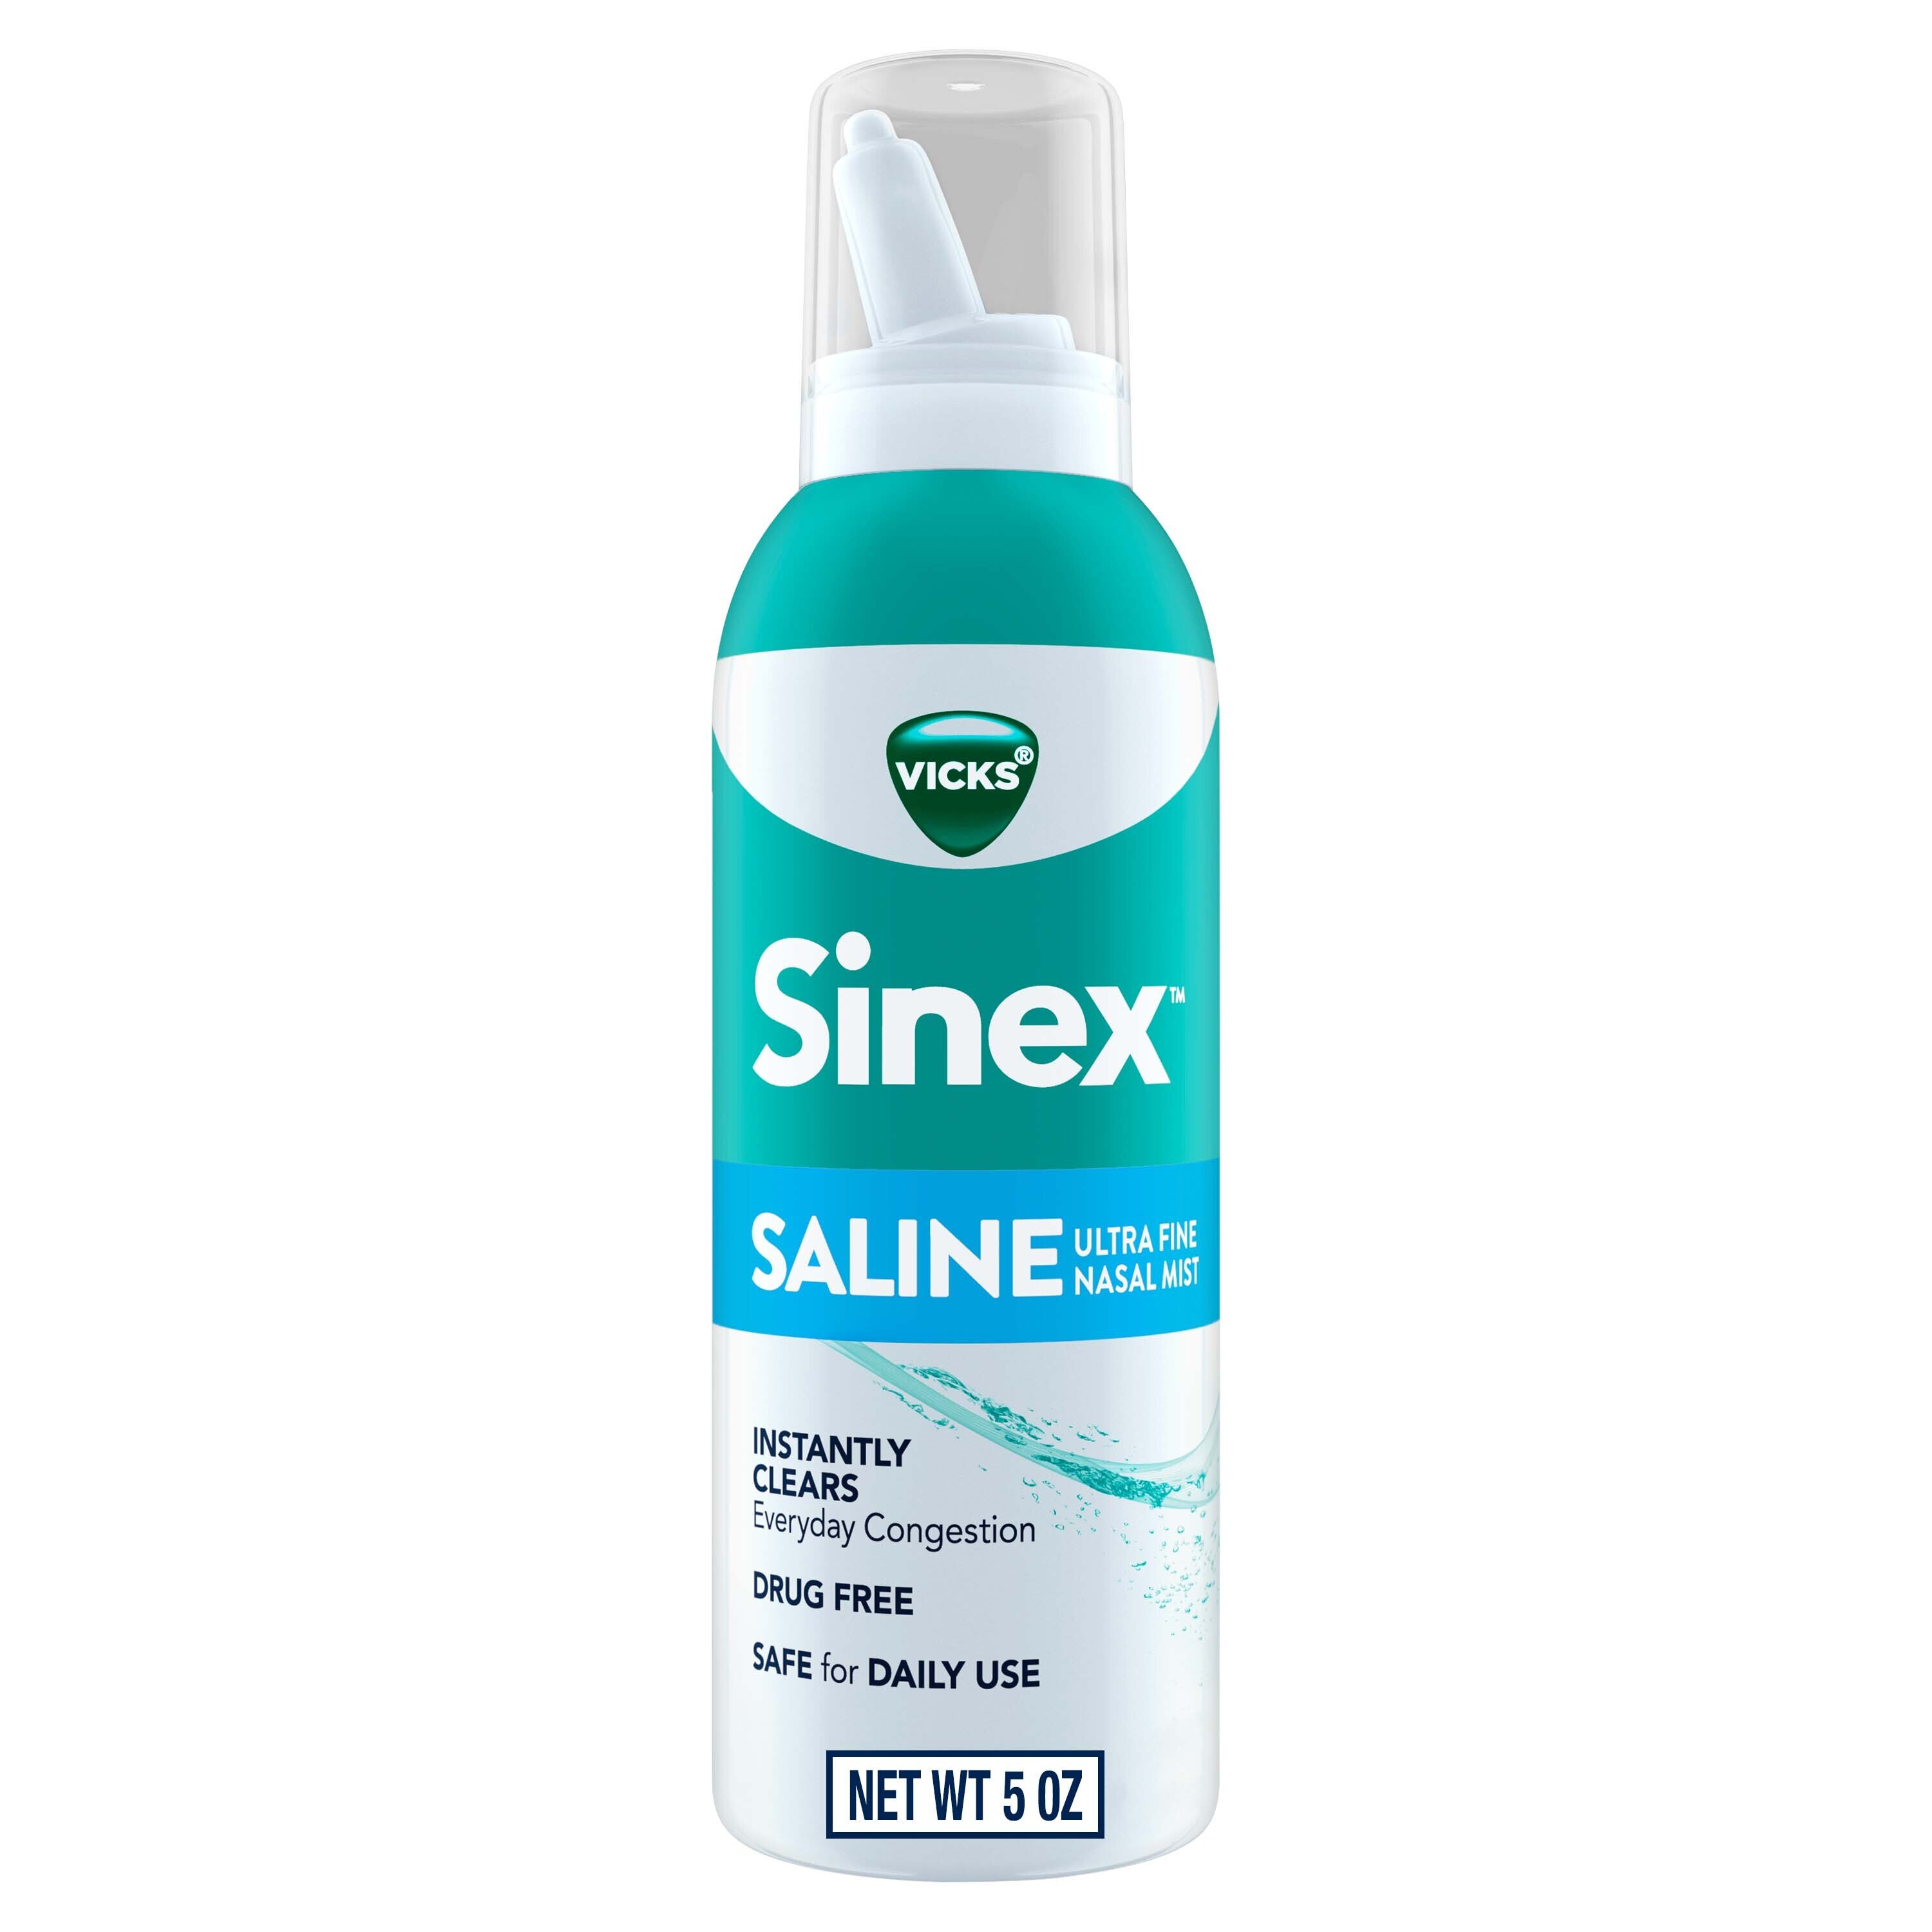 Vicks Sinex SALINE - Vapor nasal ultrafino en spray, 5 oz